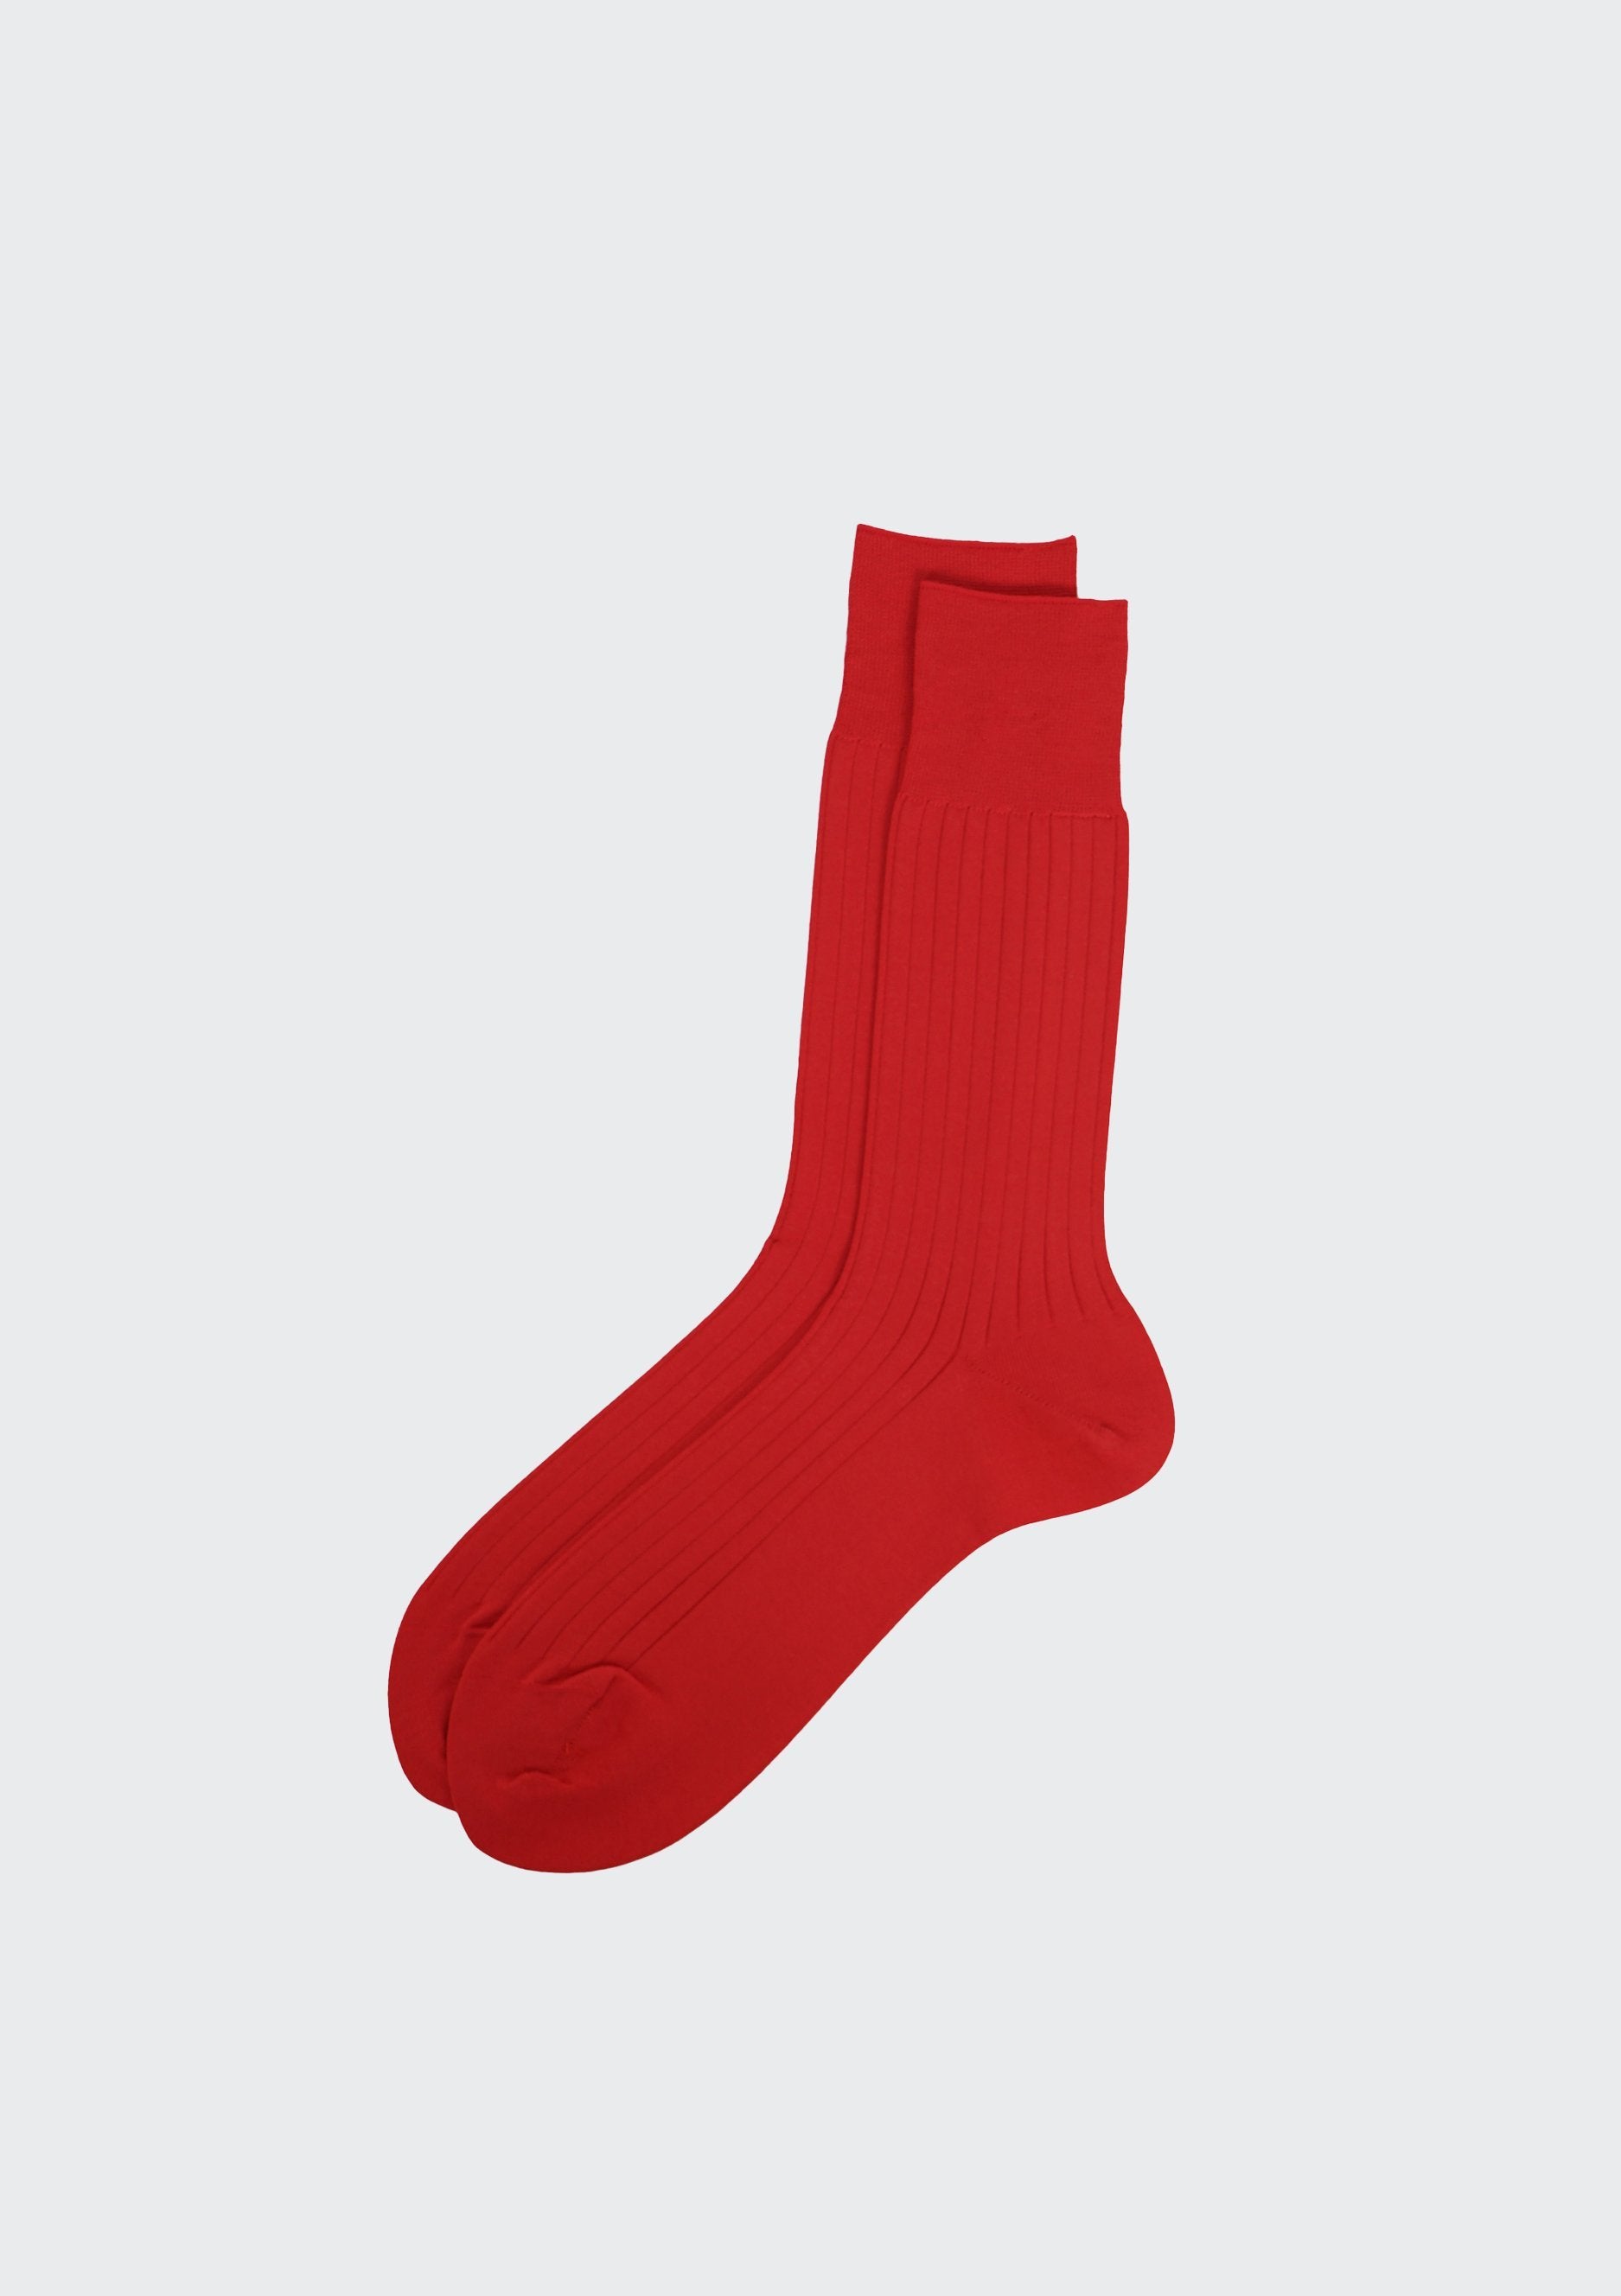 Dress Socks / Red